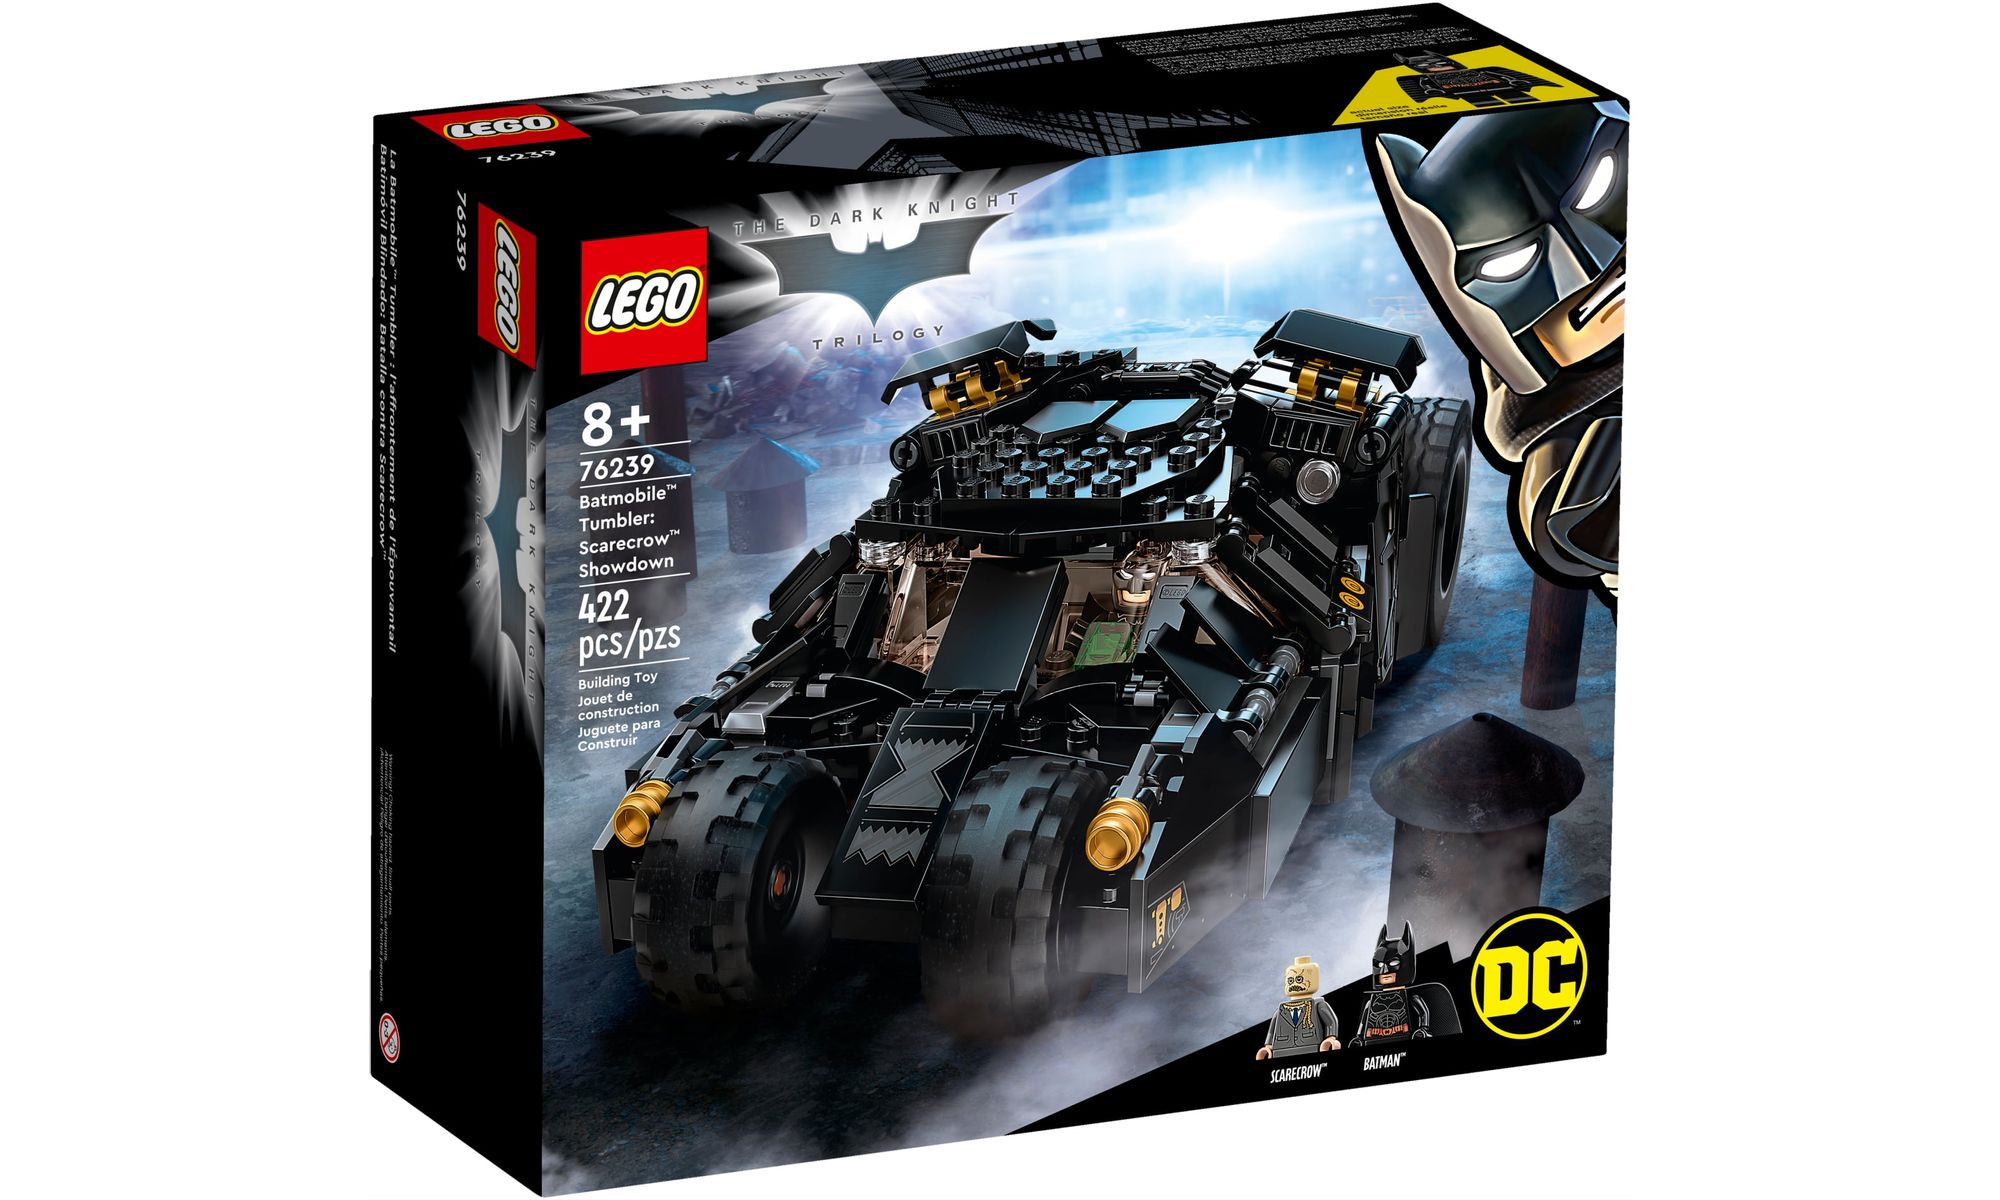 Lego DC Batman 76239 - Batman Batmobile Tumbler: Confronto do Espantalho - Foto 5